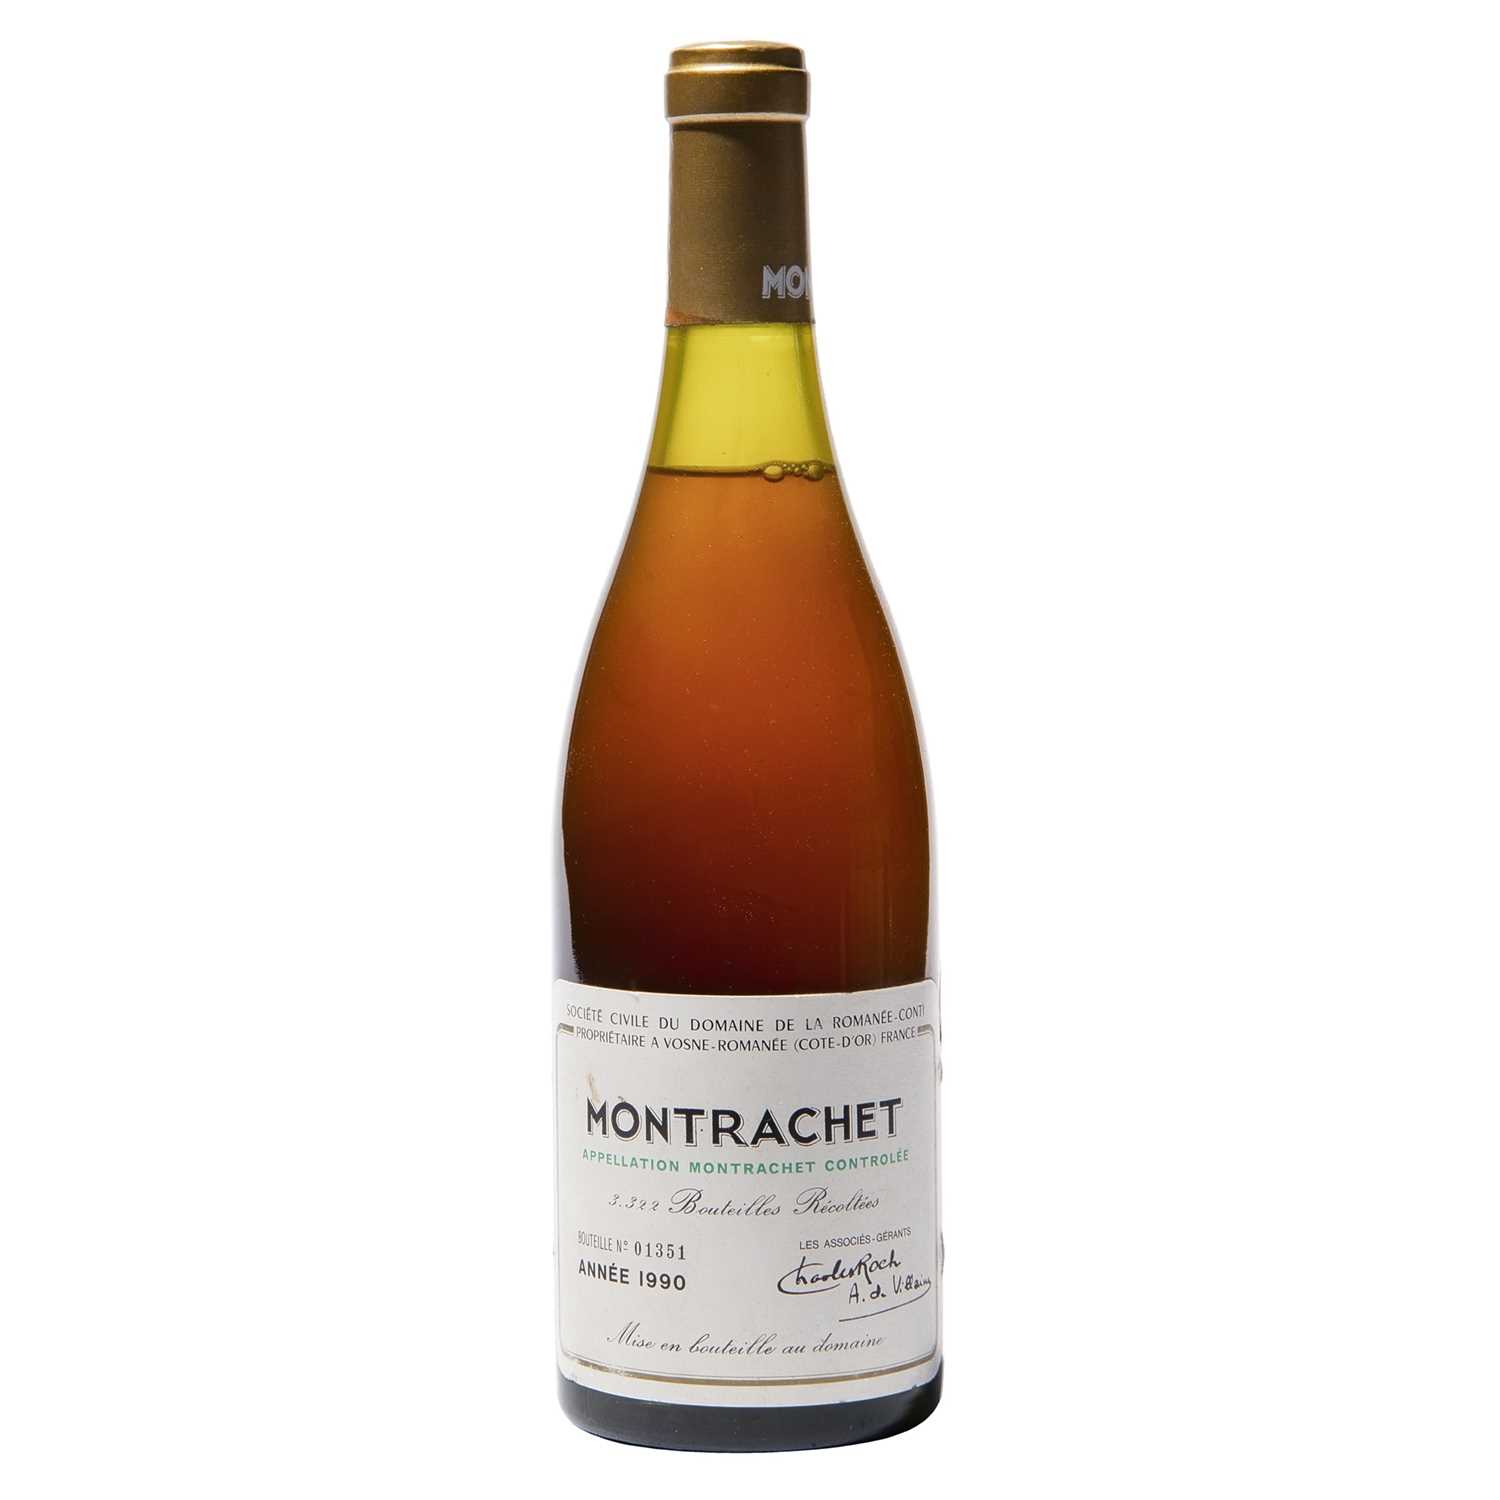 Lot 94 - 1 bottle 1990 Montrachet DRC